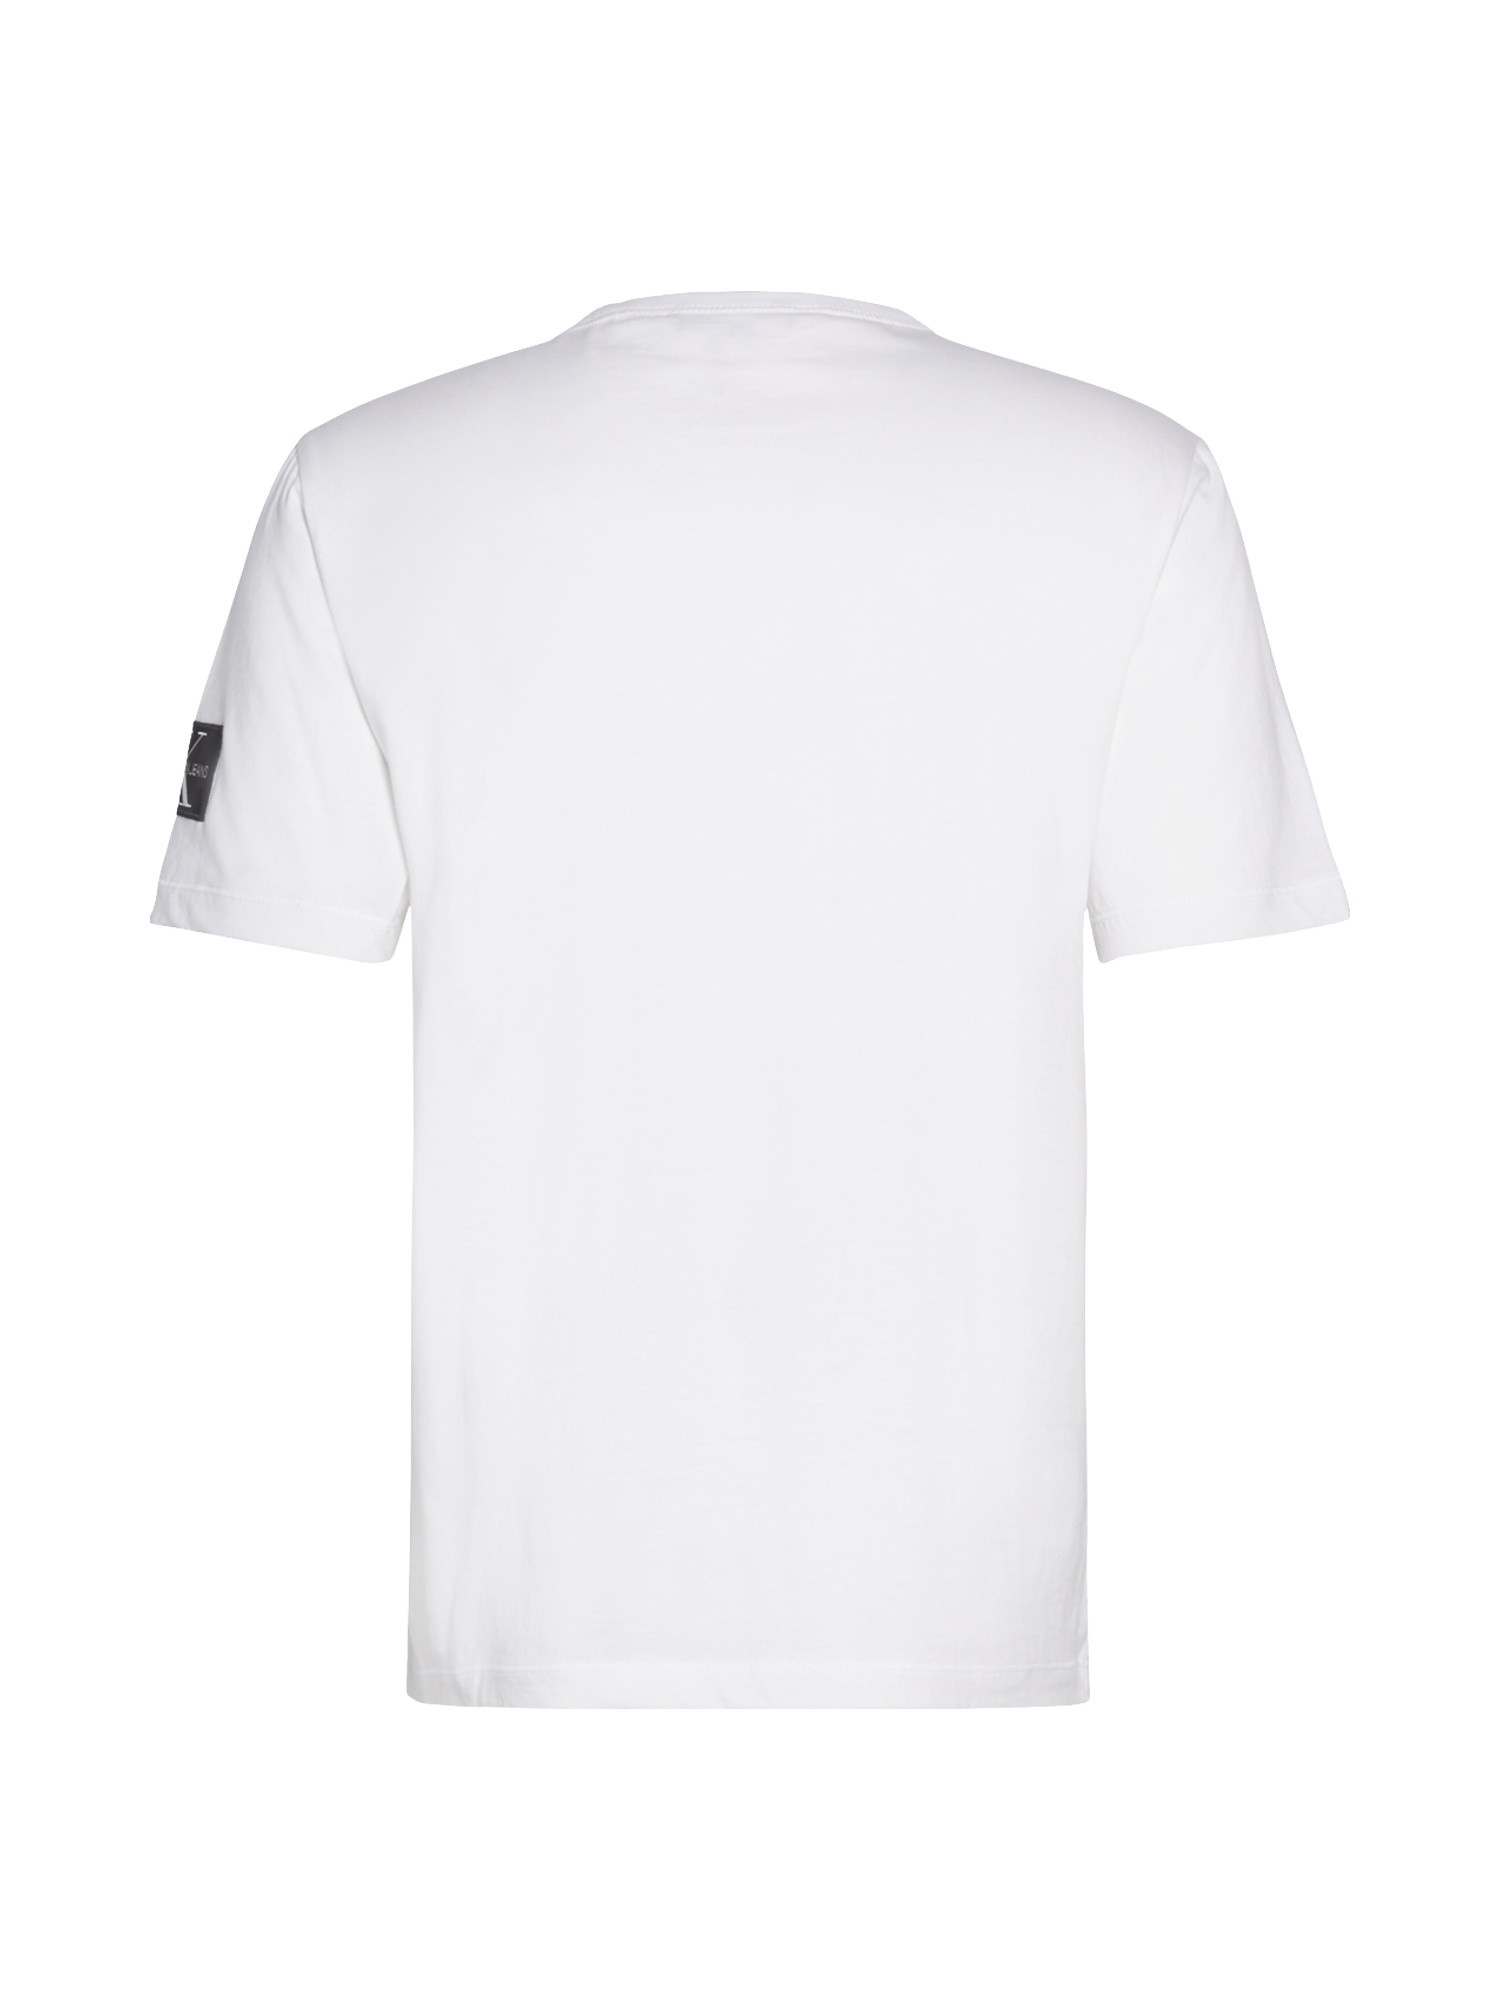 T-shirt con logo, Bianco, large image number 1